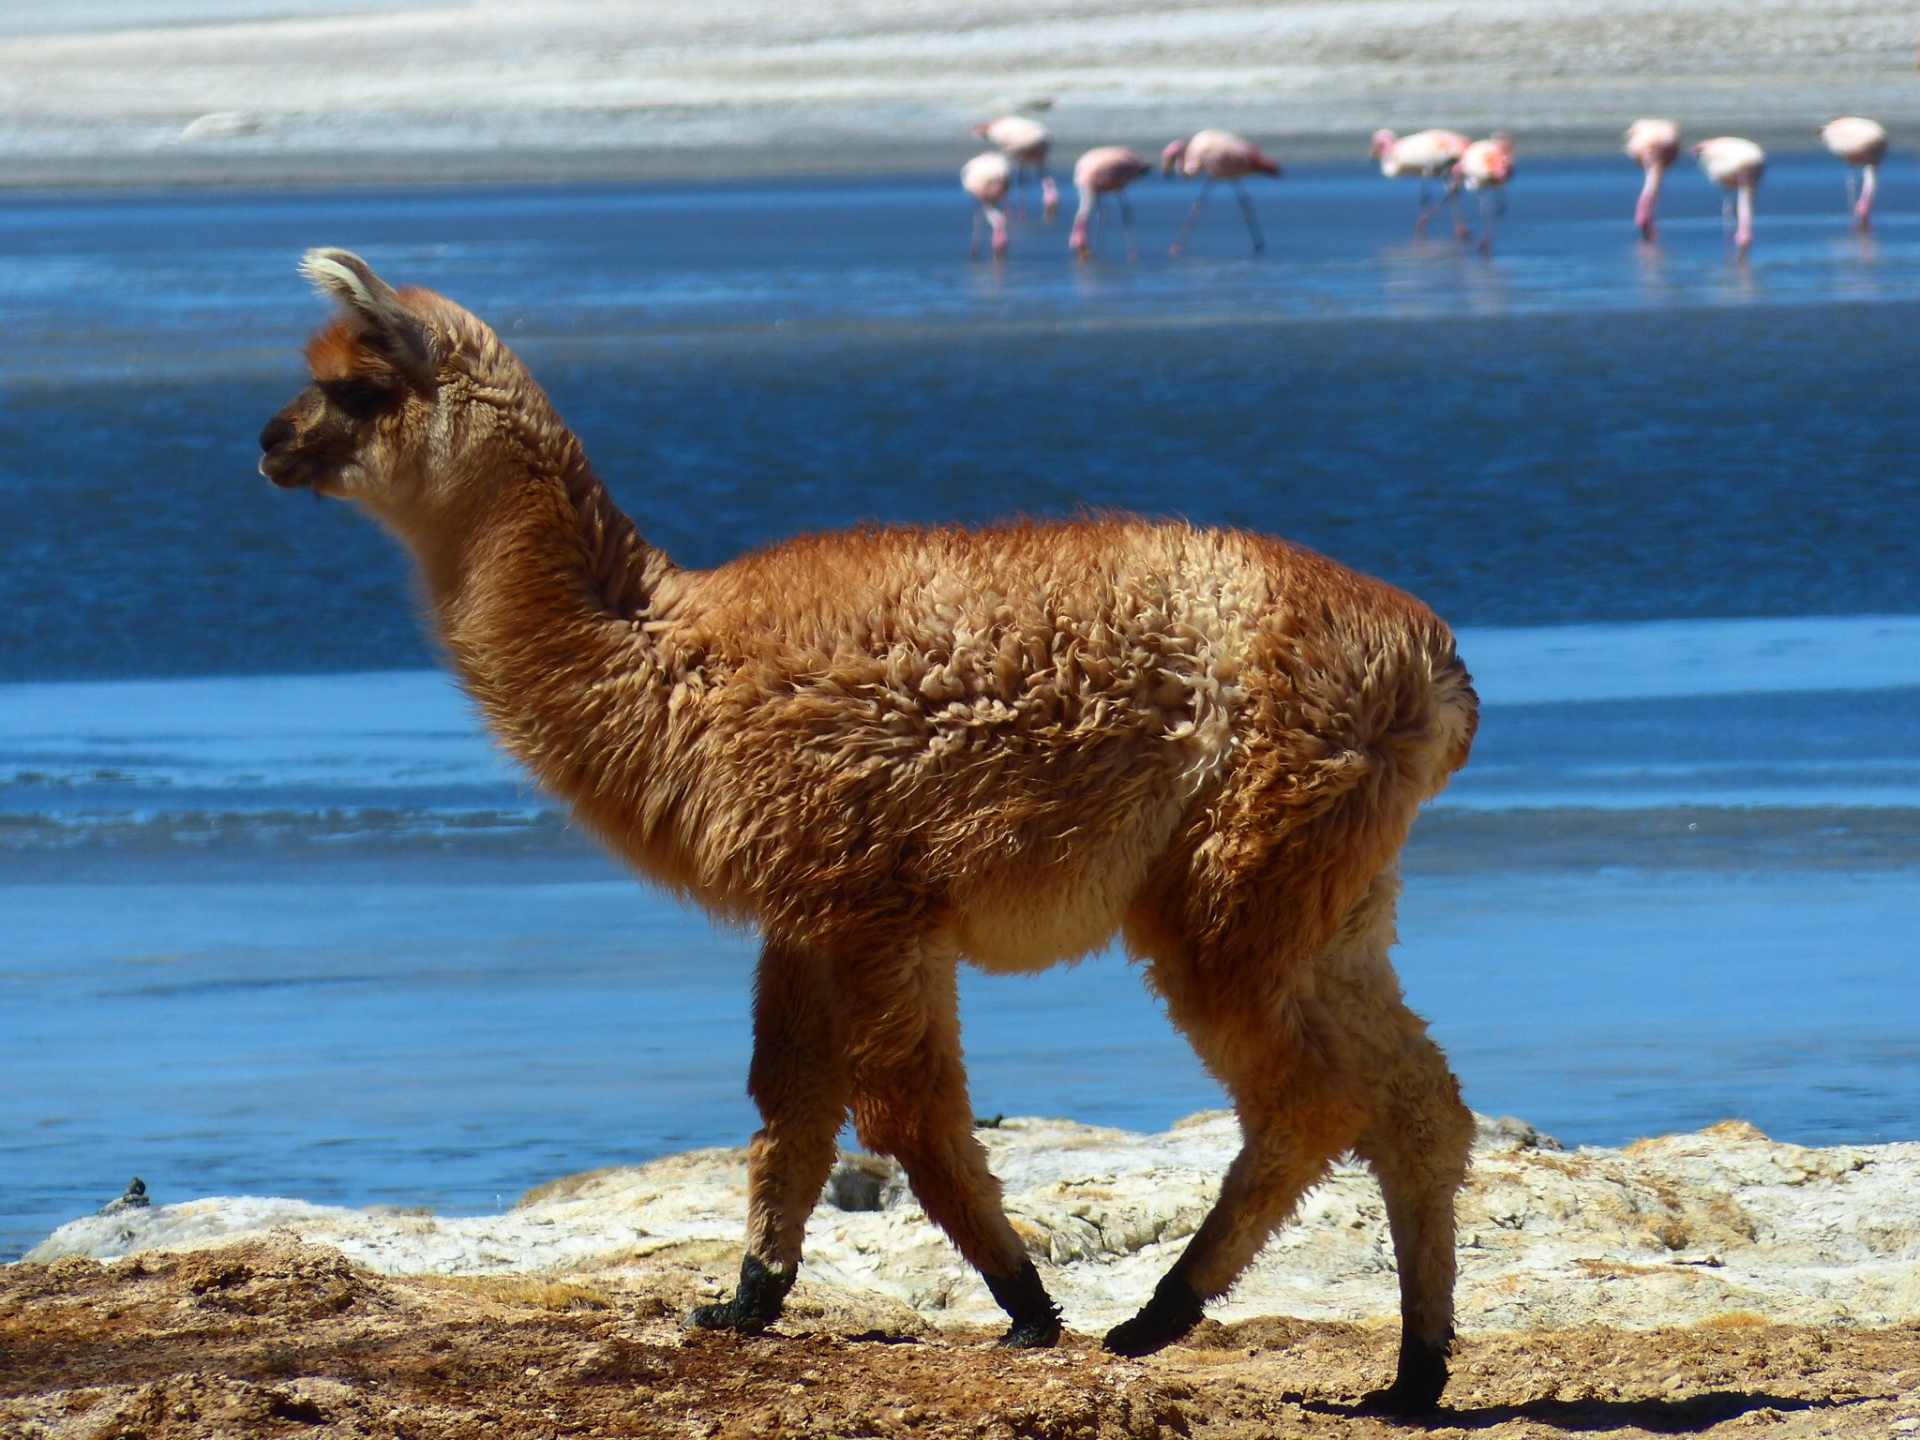 Atacama wildlife - Atacama to Lake Titicaca